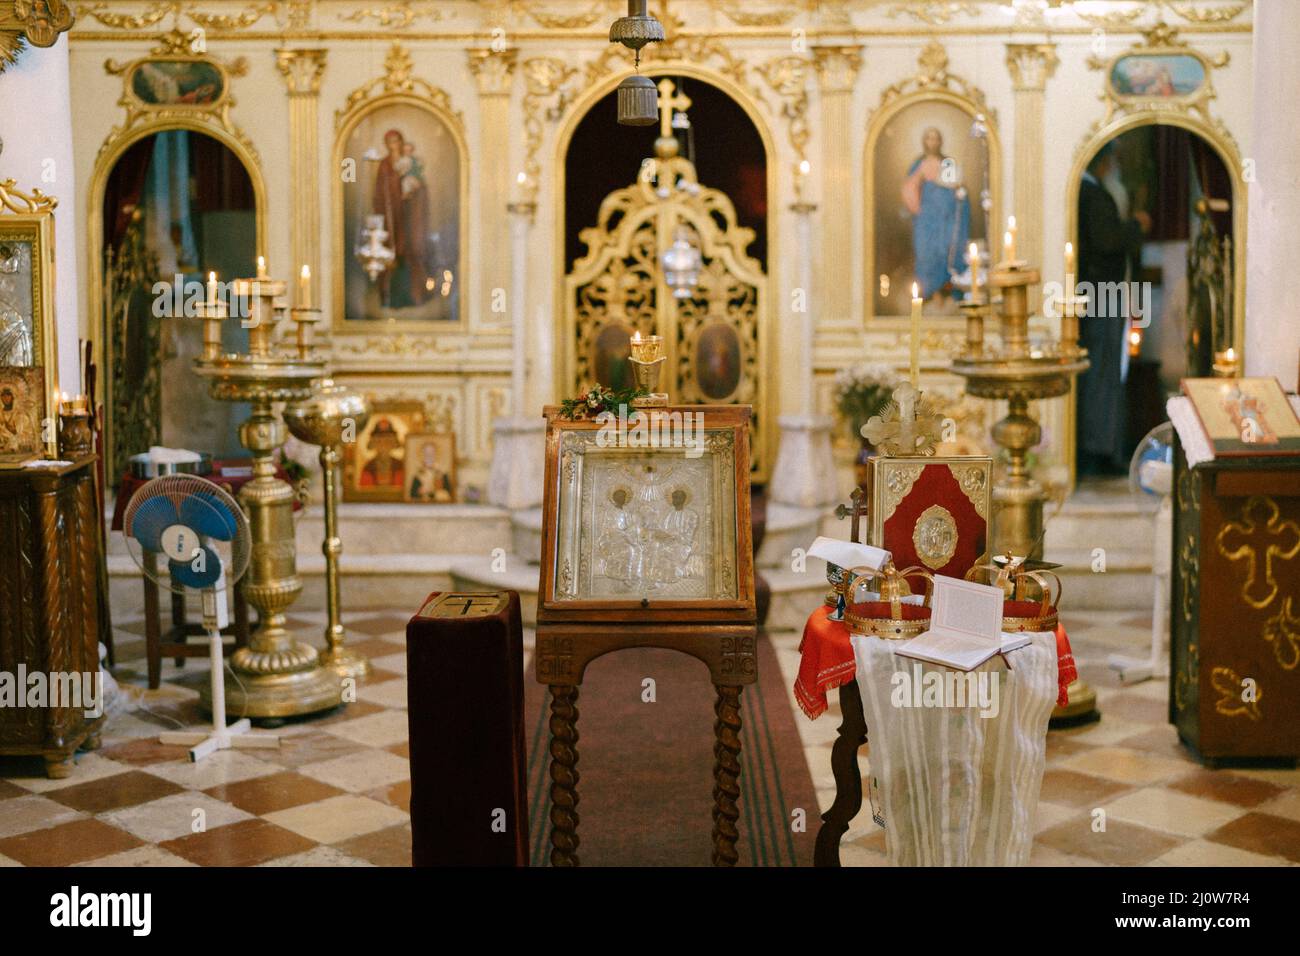 Iconostasis around the altar in the church with white columns Stock Photo